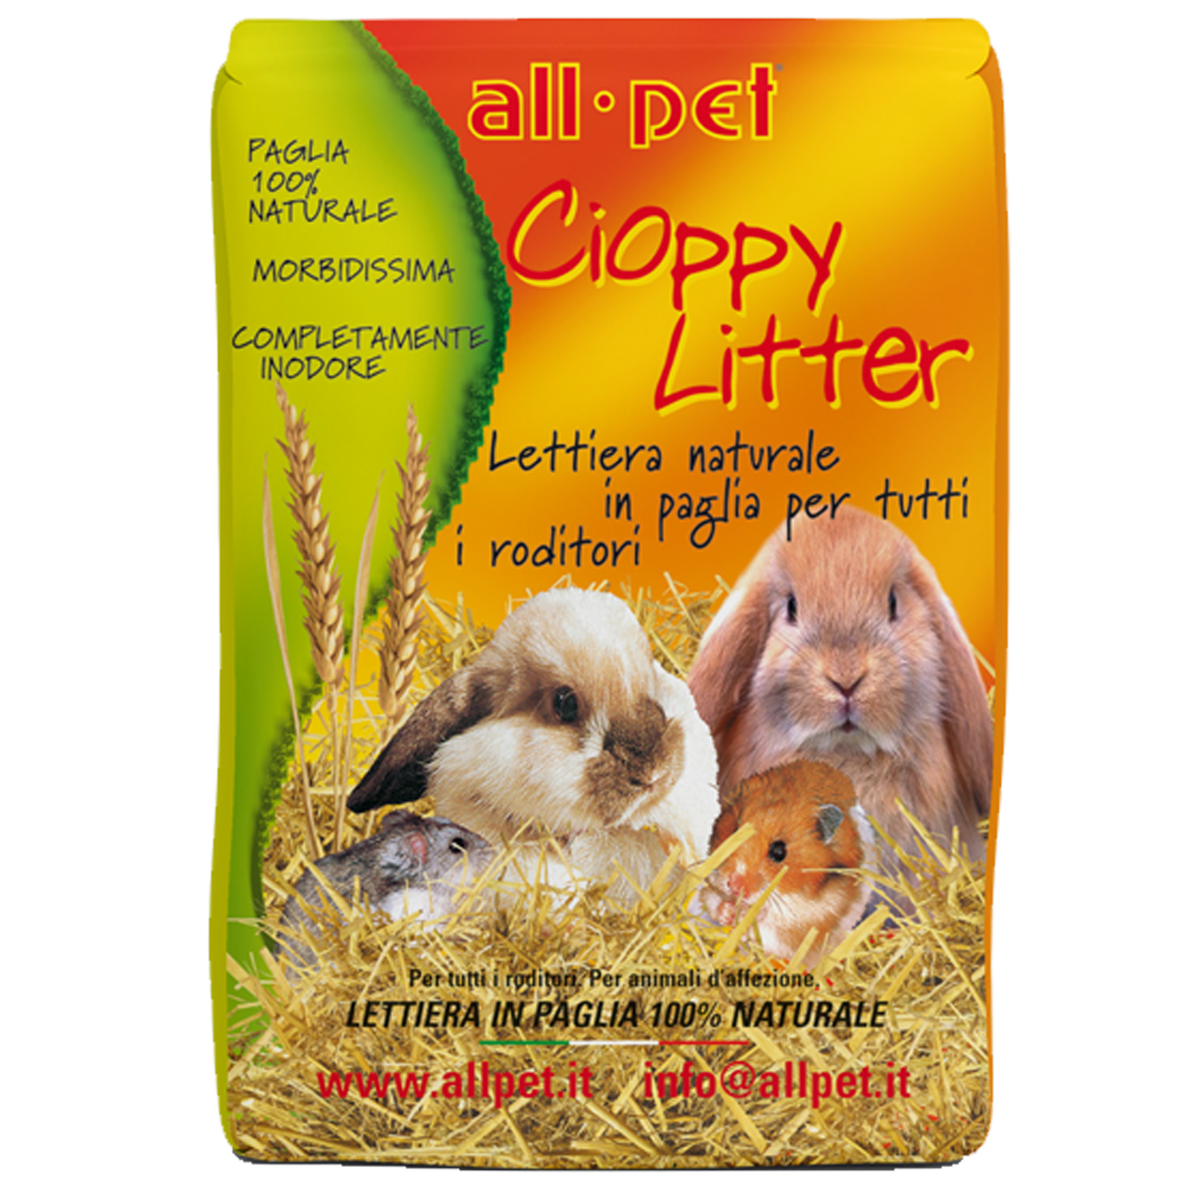 Cioppy litter paglia - 1 kg - H2zoo